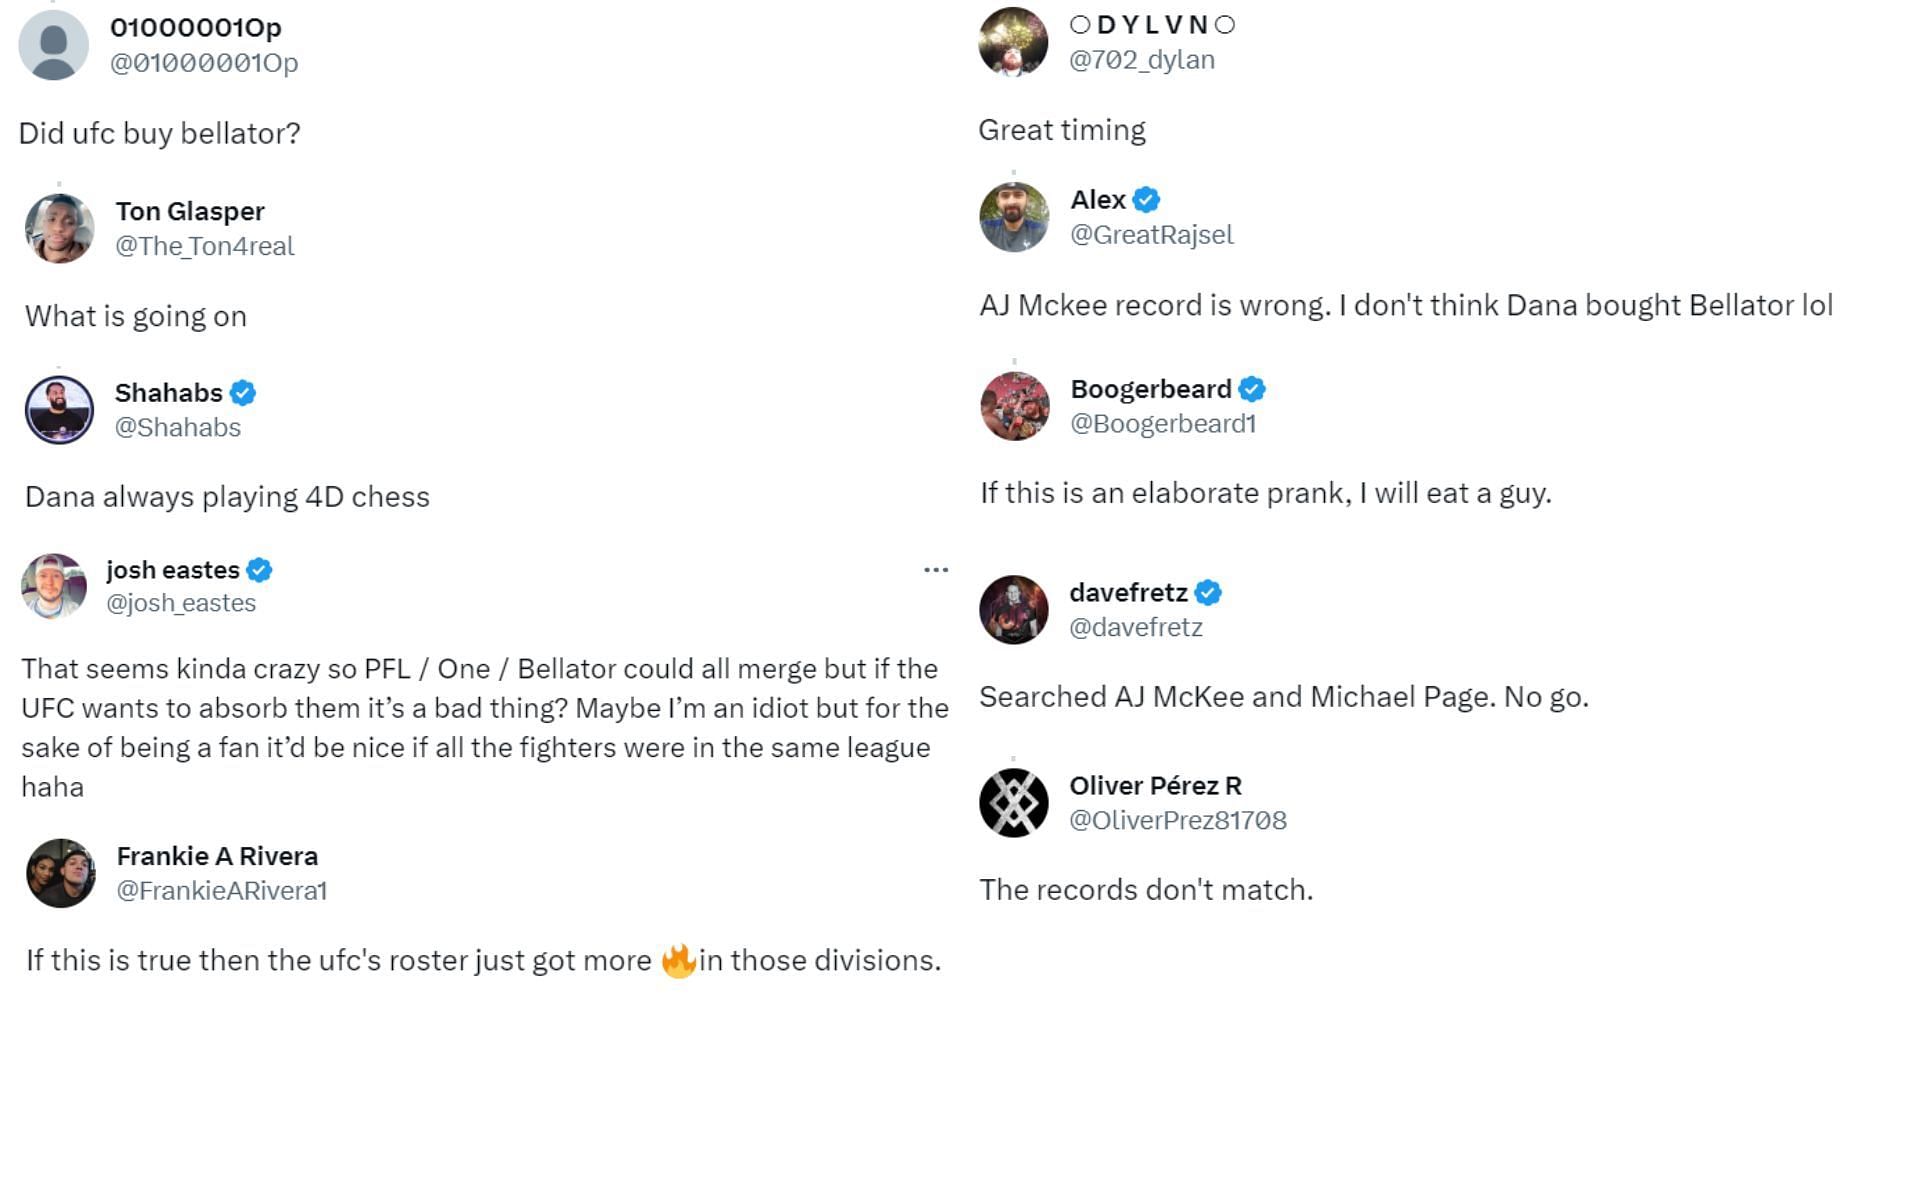 Screenshots of fan responses to the rumors of UFC buying Bellator